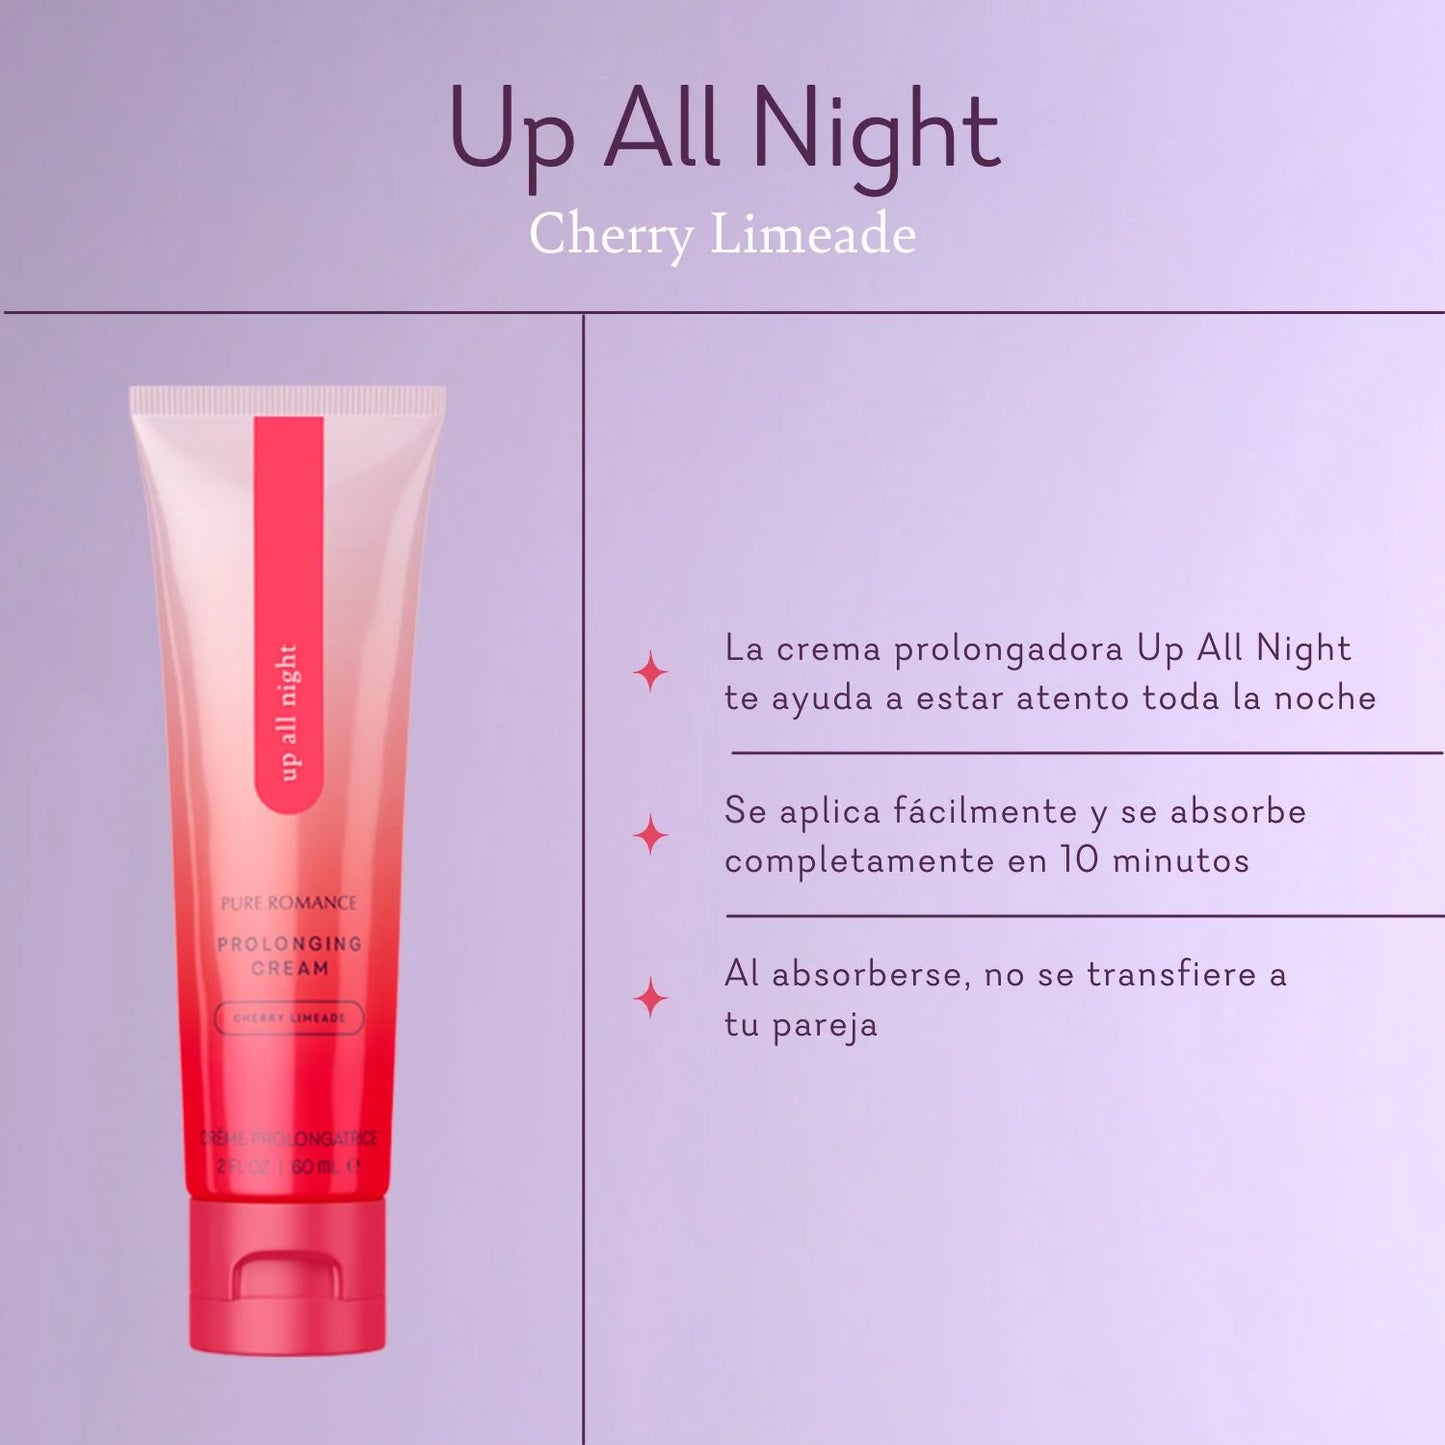 Up All Night - Cherry Limeade (Crema prolongadora)